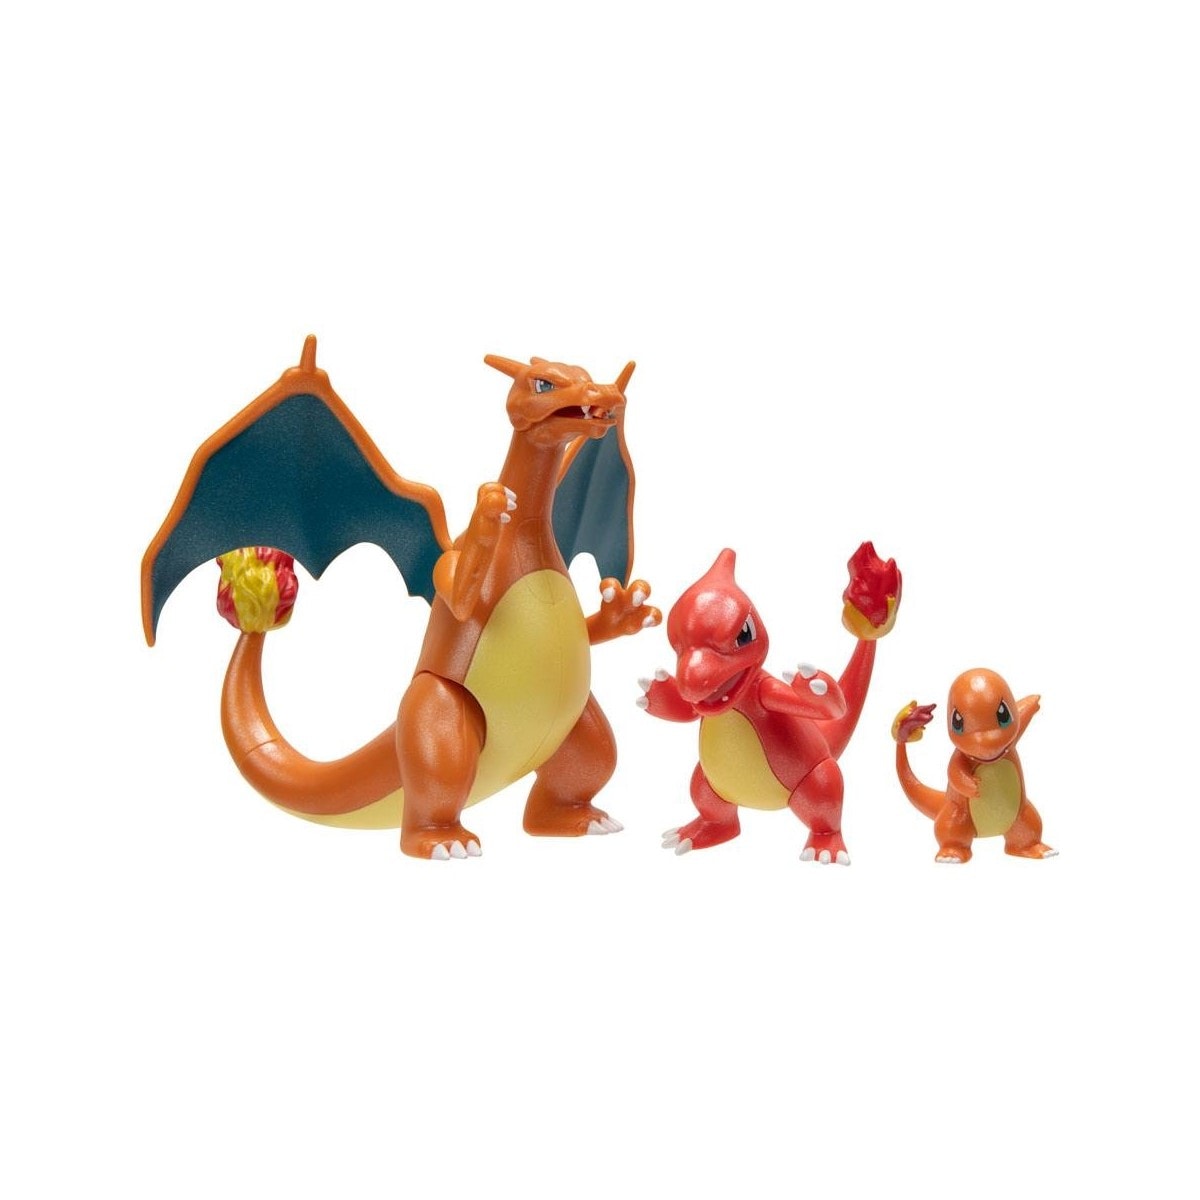 Pokémon - pack 3 figurines select evolution charmander